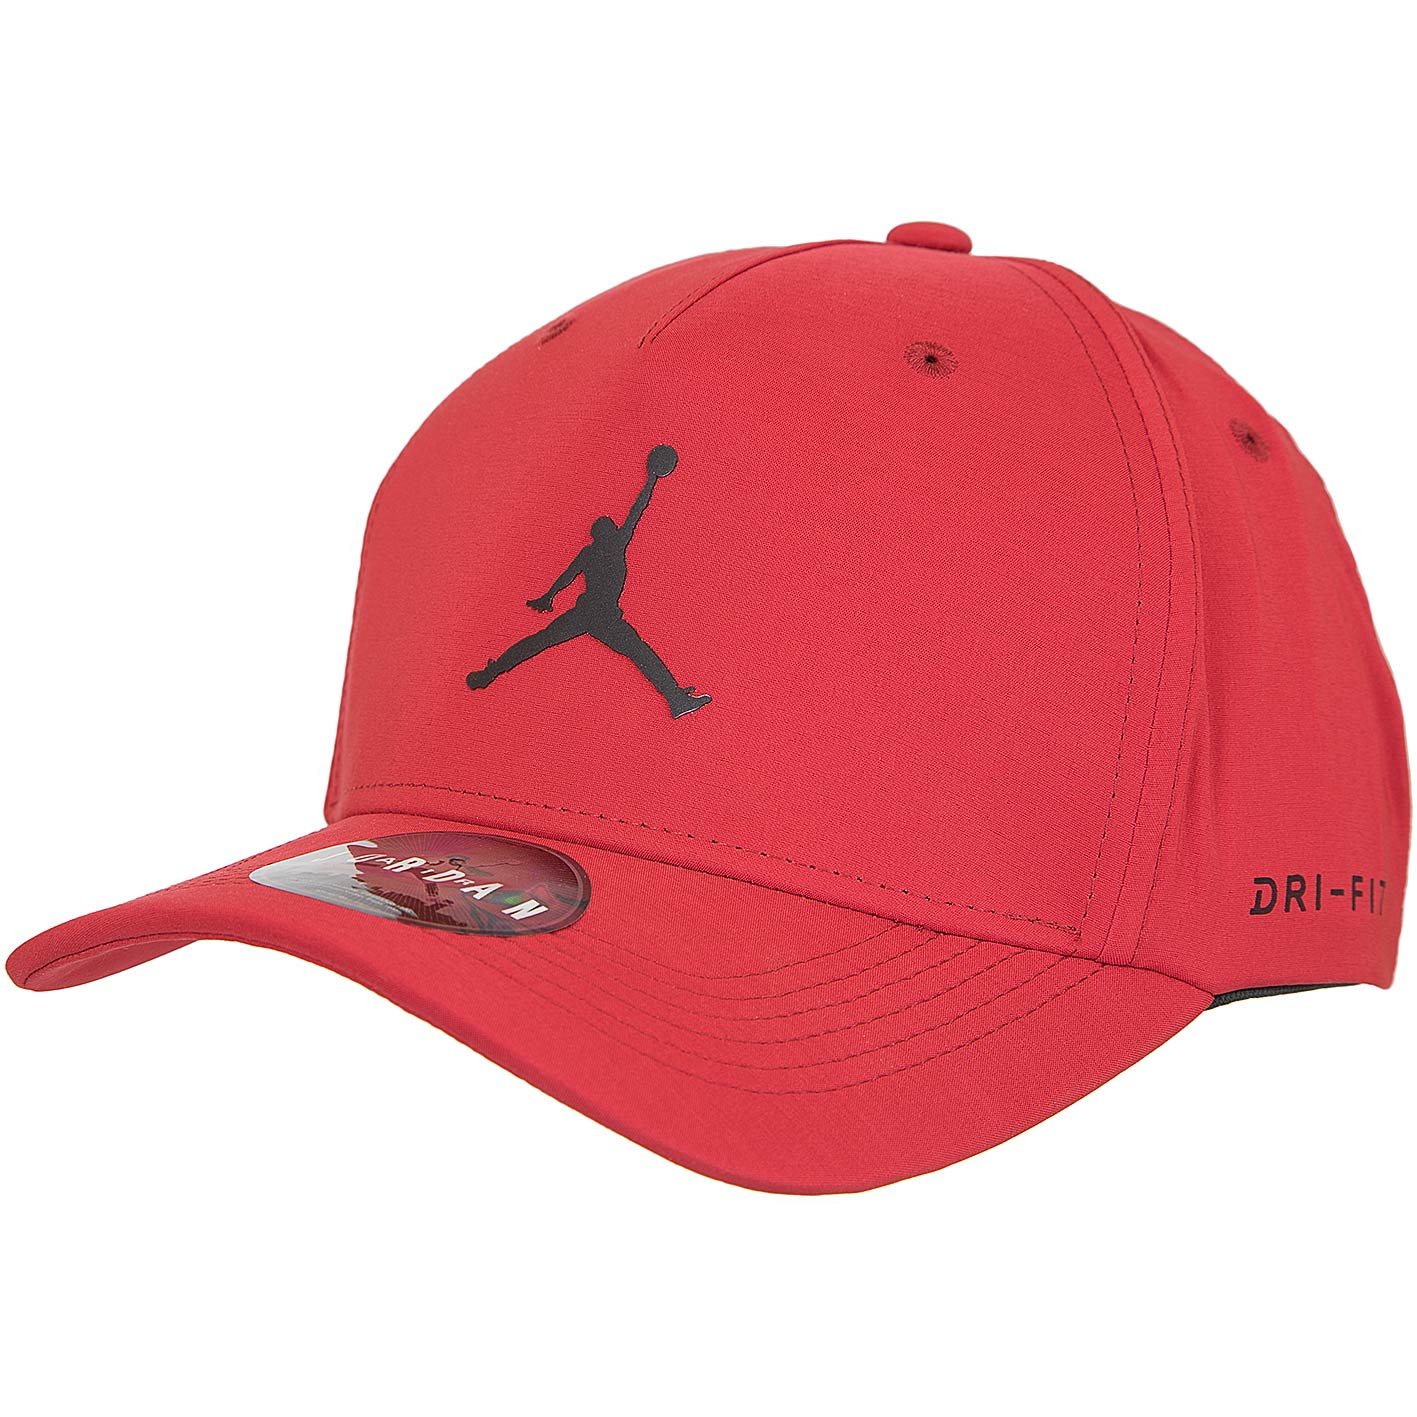 ☆ Nike Fitted Cap Jordan Classic99 rot - hier bestellen!